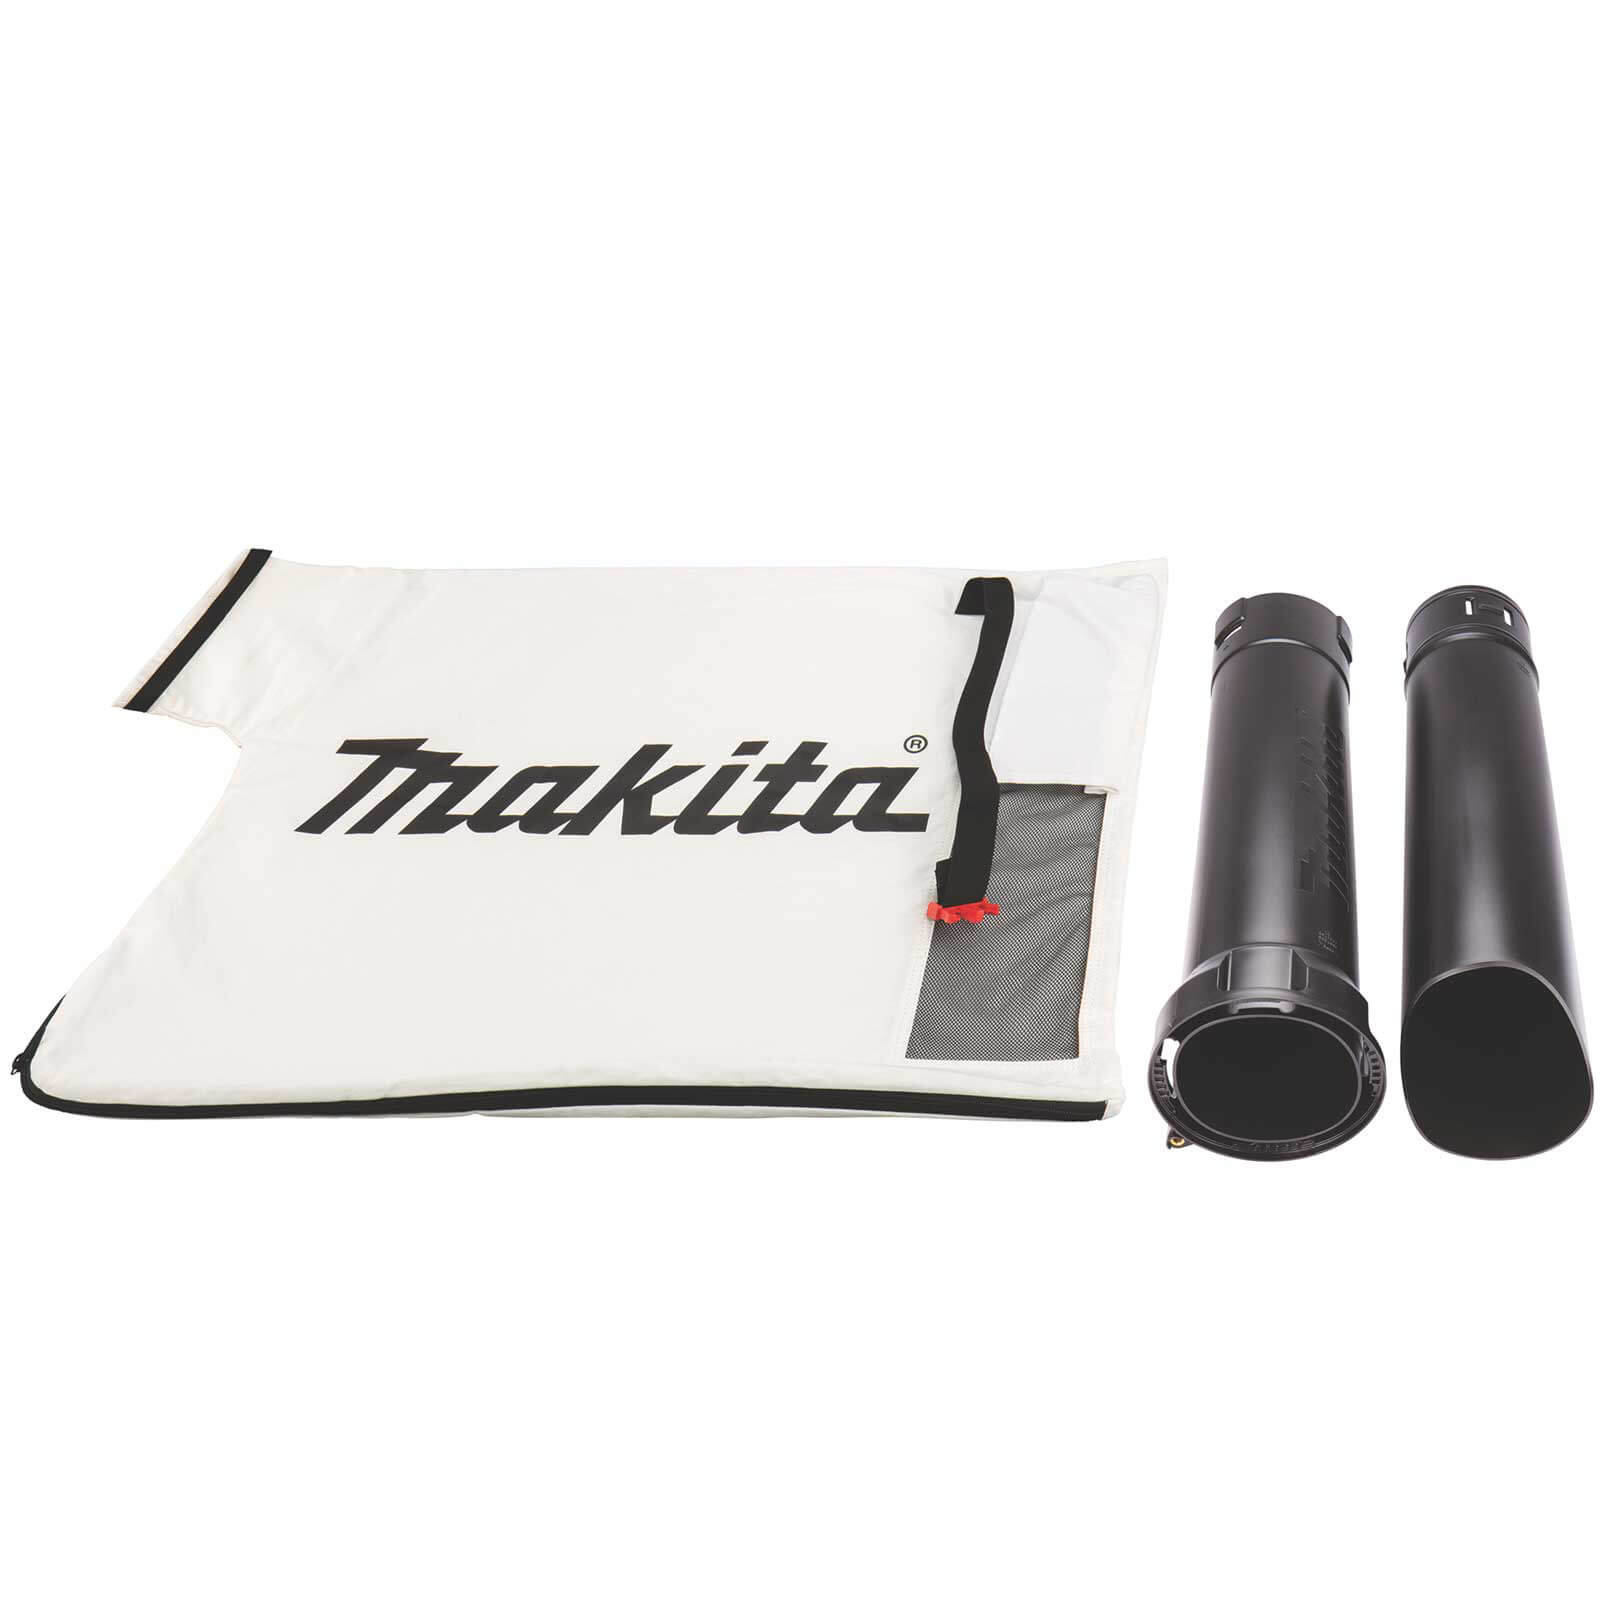 Photos - Leaf Blower Makita 191E19-1 Vacuum Kit For DUB363 